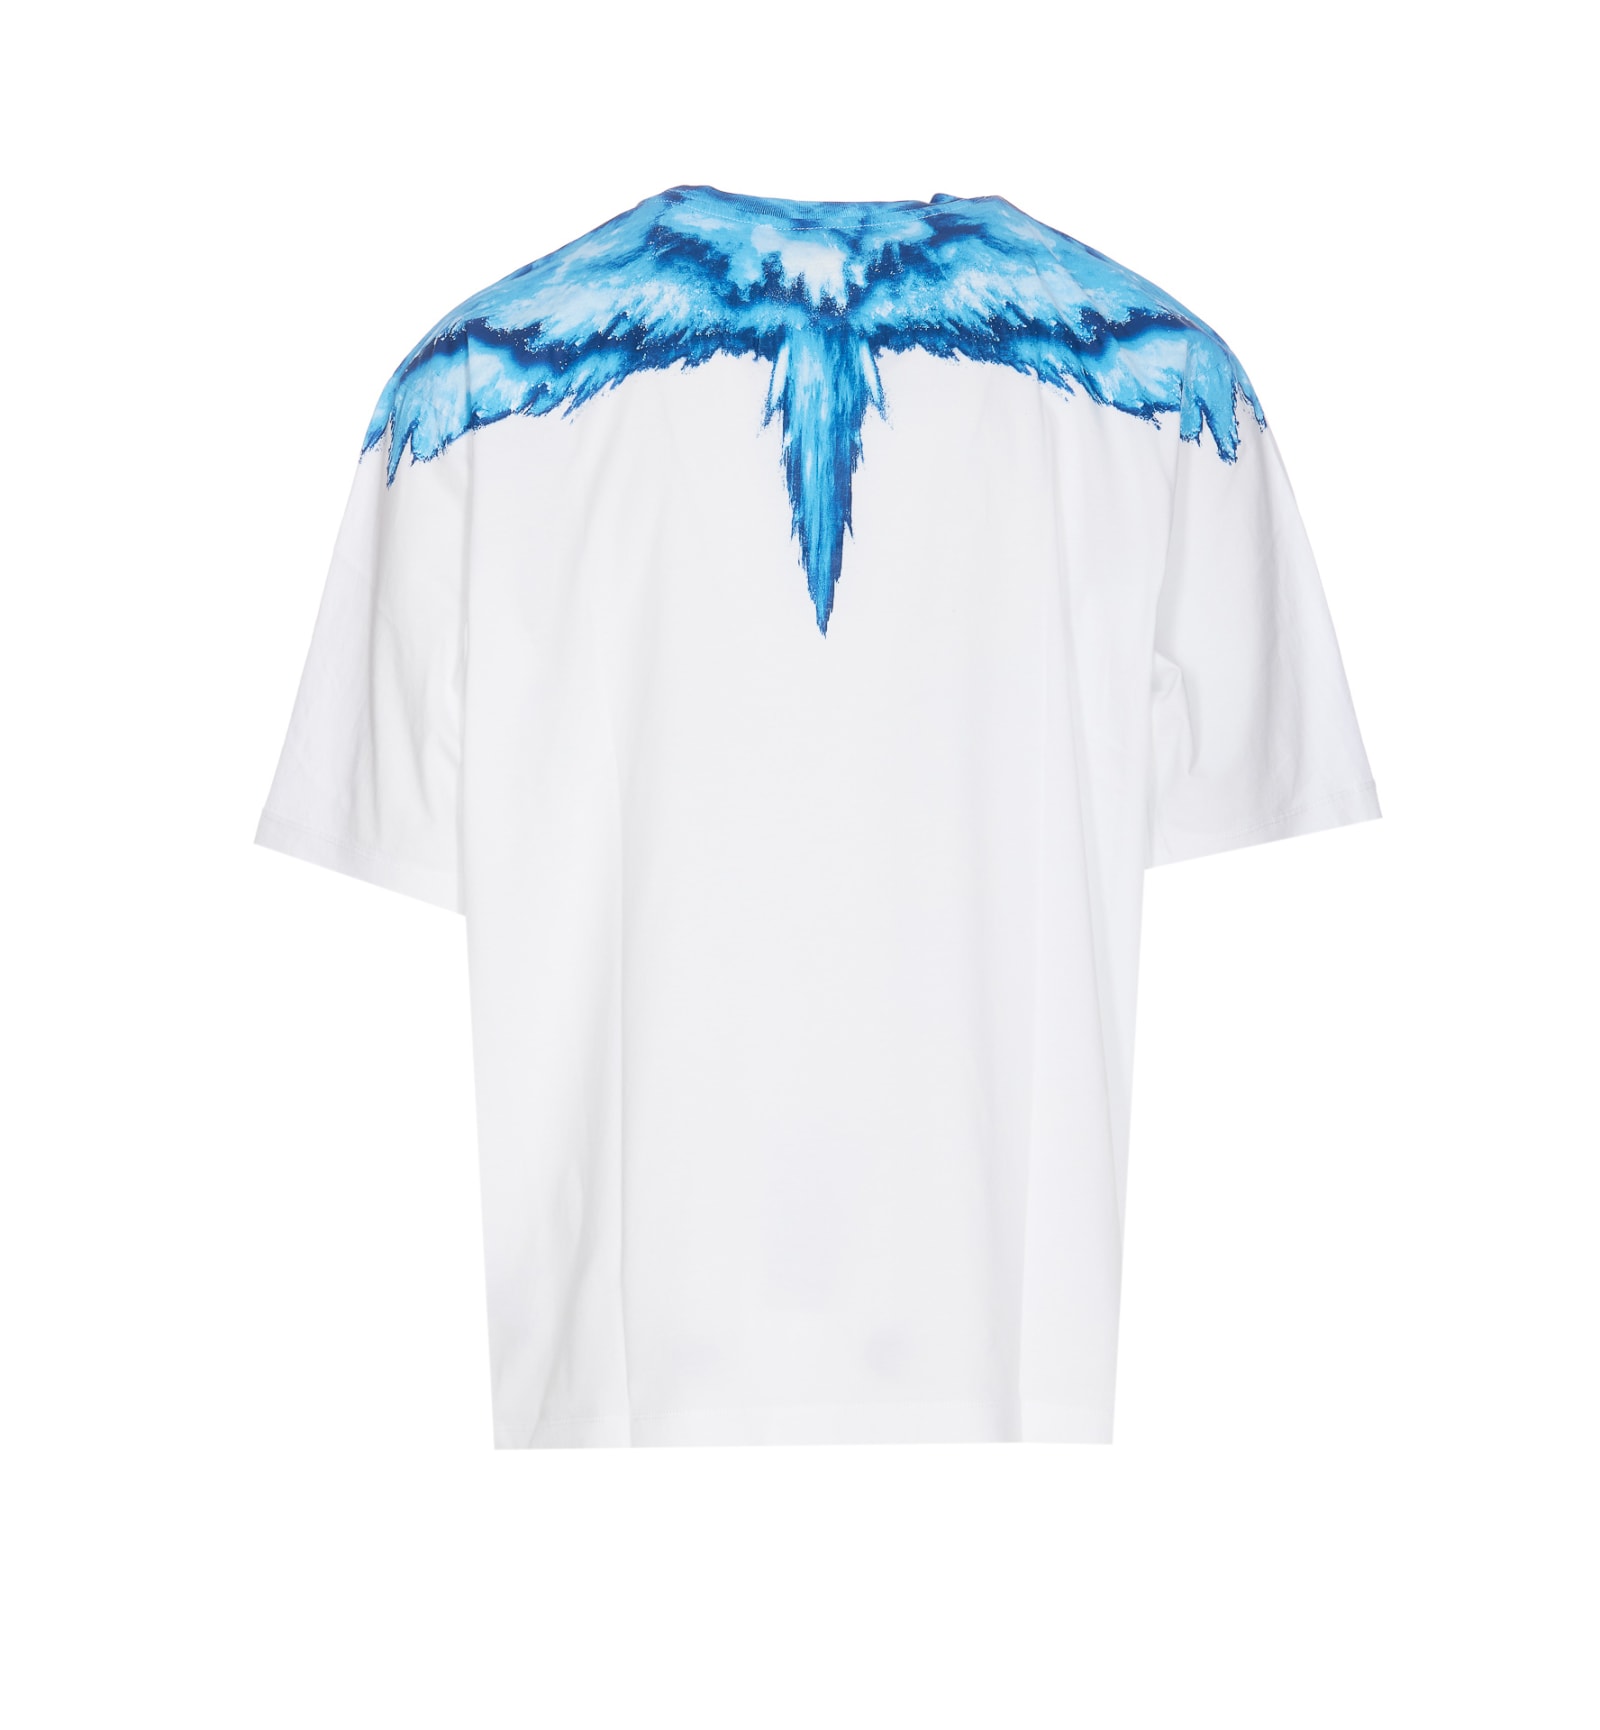 Shop Marcelo Burlon County Of Milan Colordust Wings Oversize T-shirt In Bianco Azzurro